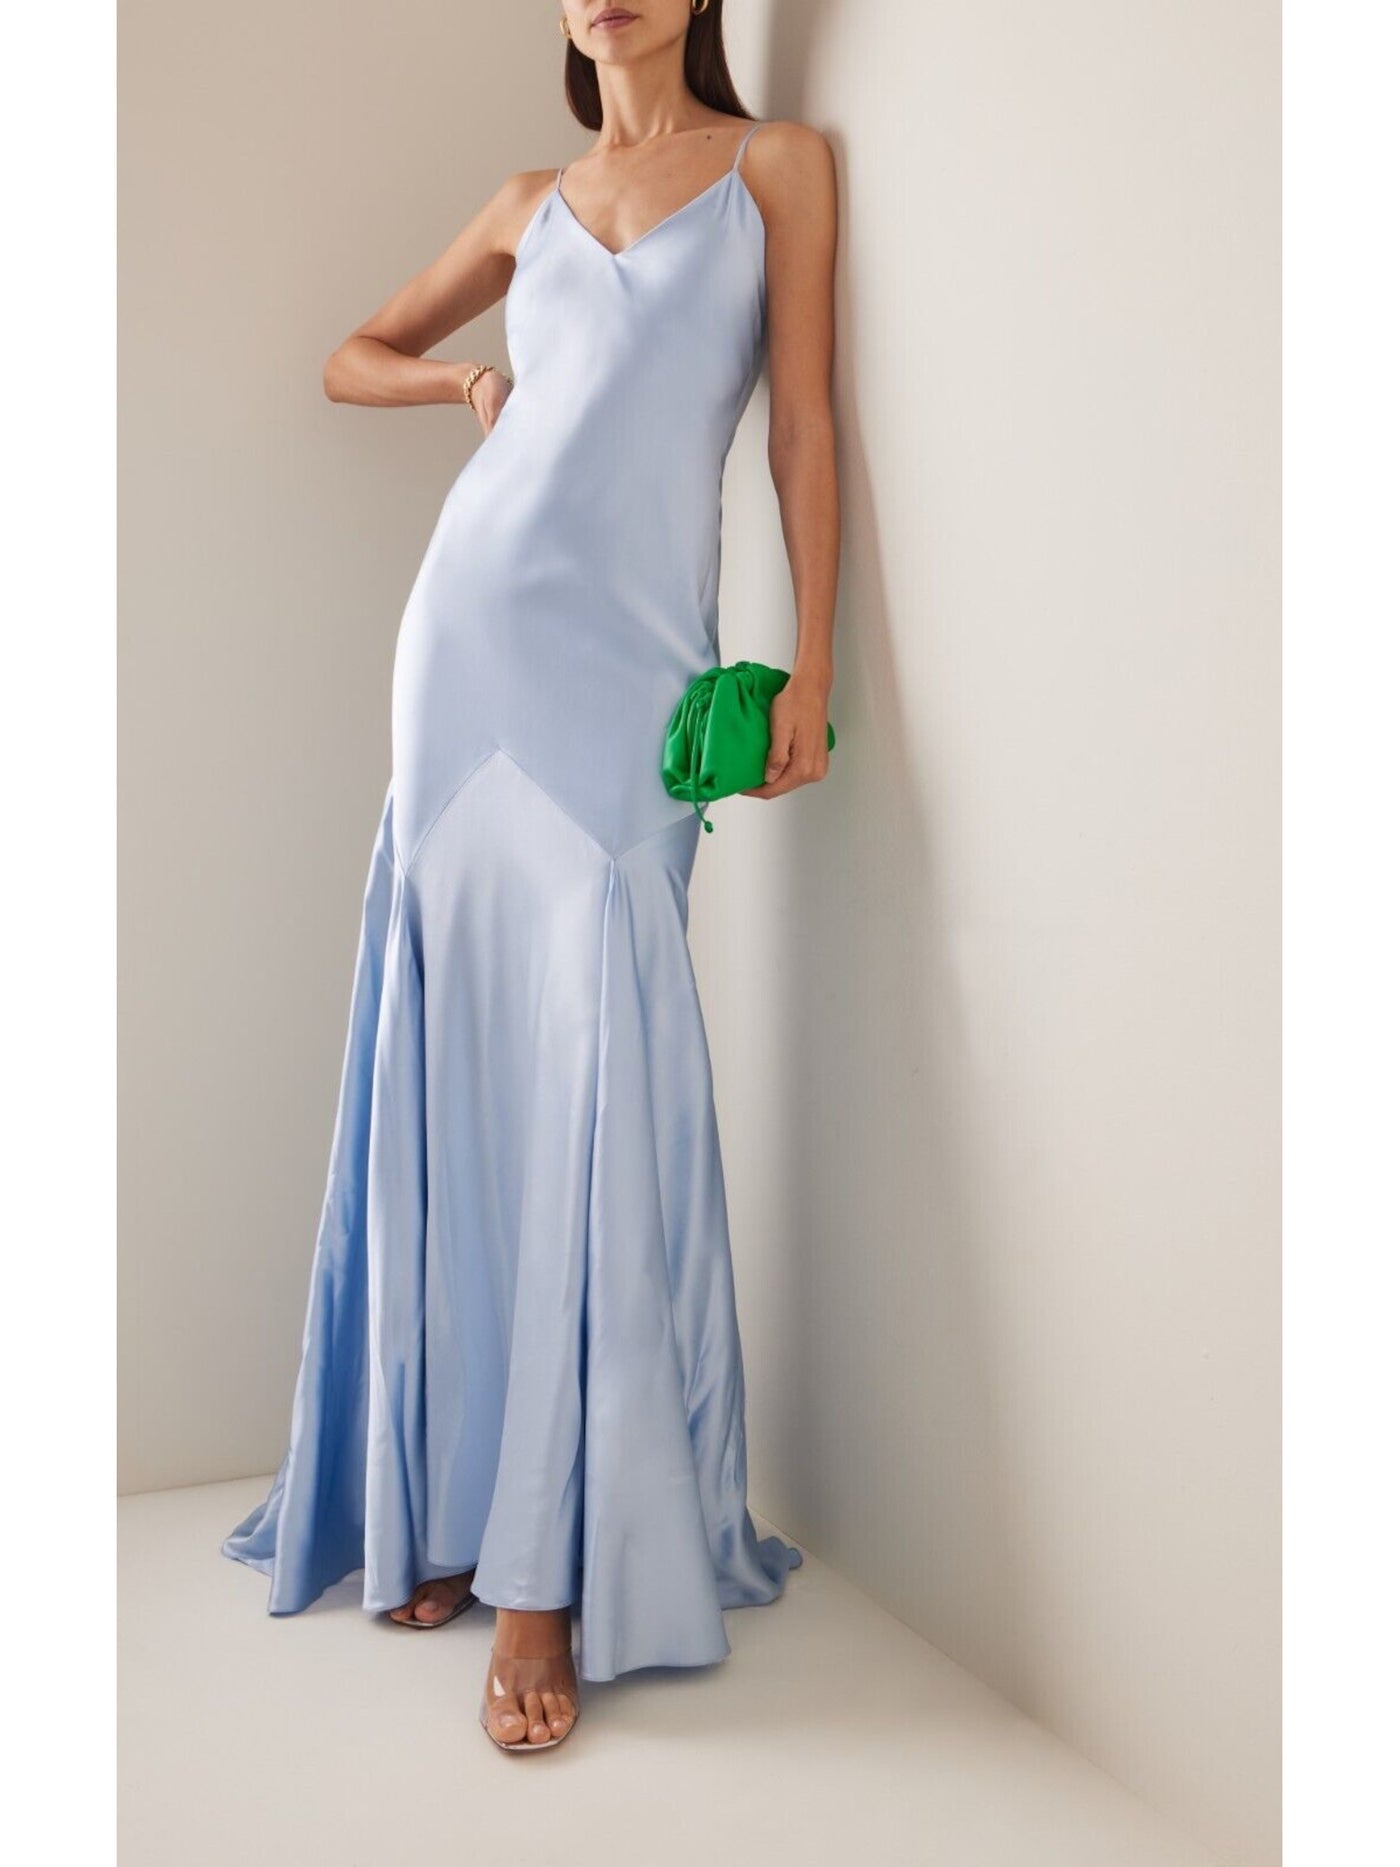 SERGIO HUDSON Womens Light Blue Zippered Adjustable Train Lined Spaghetti Strap V Neck Full-Length Formal Gown Dress 6